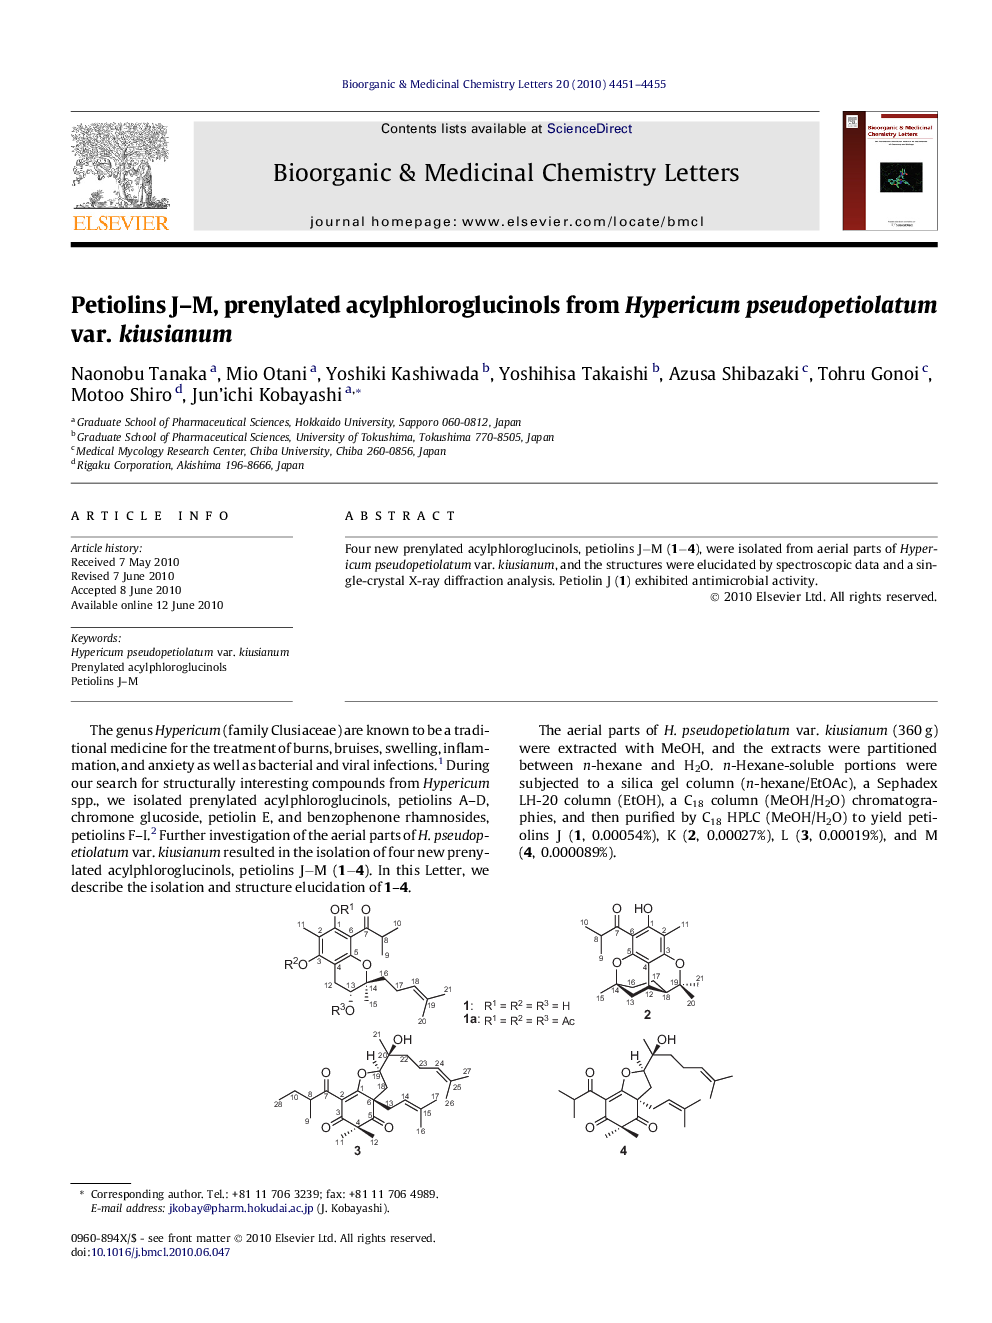 Petiolins J-M, prenylated acylphloroglucinols from Hypericum pseudopetiolatum var. kiusianum